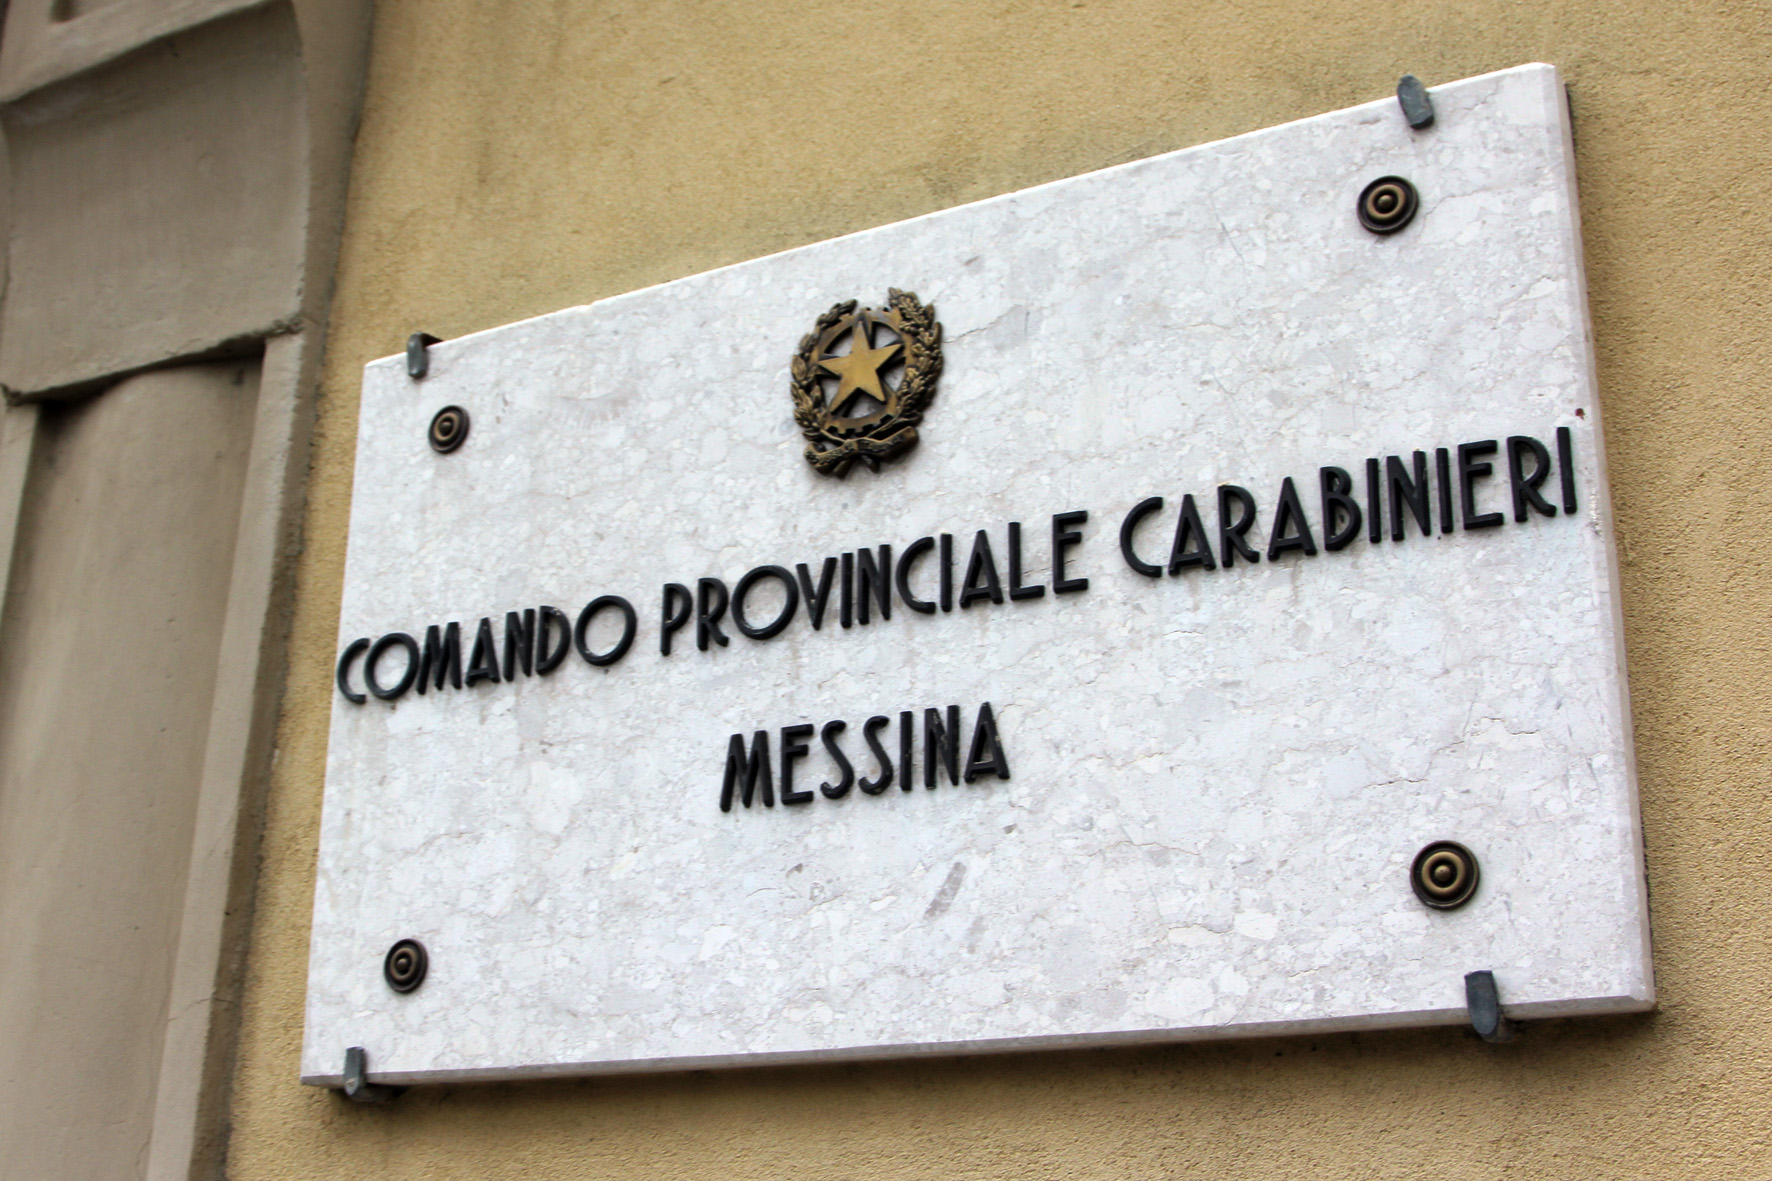 Carabinieri, s'inaugura la nuova sede dei Ris